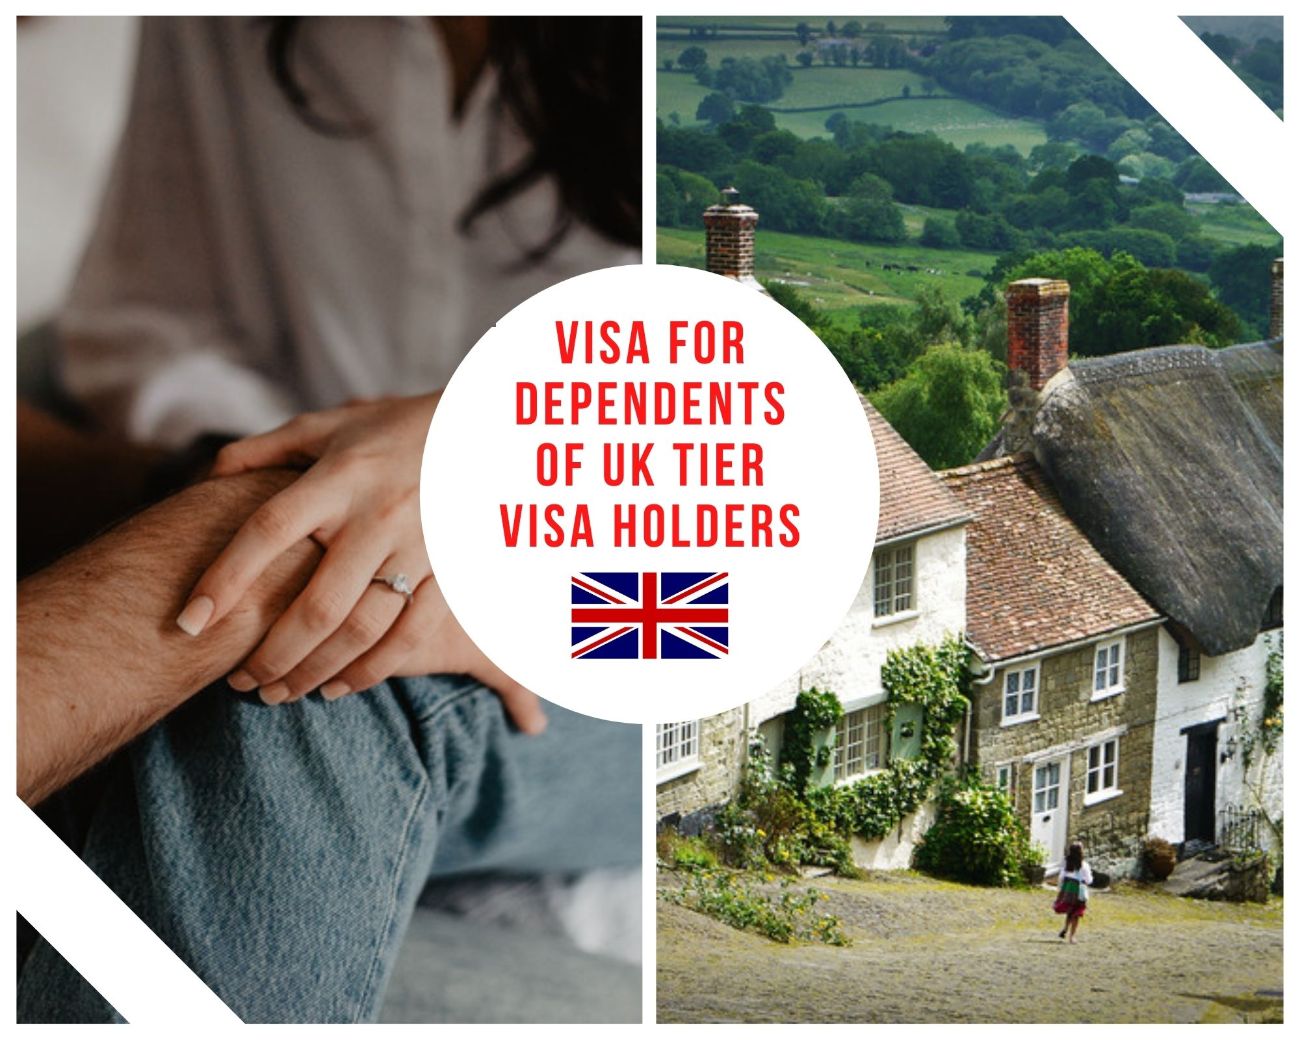 Visa for Dependents of UK Tier Visa Holders